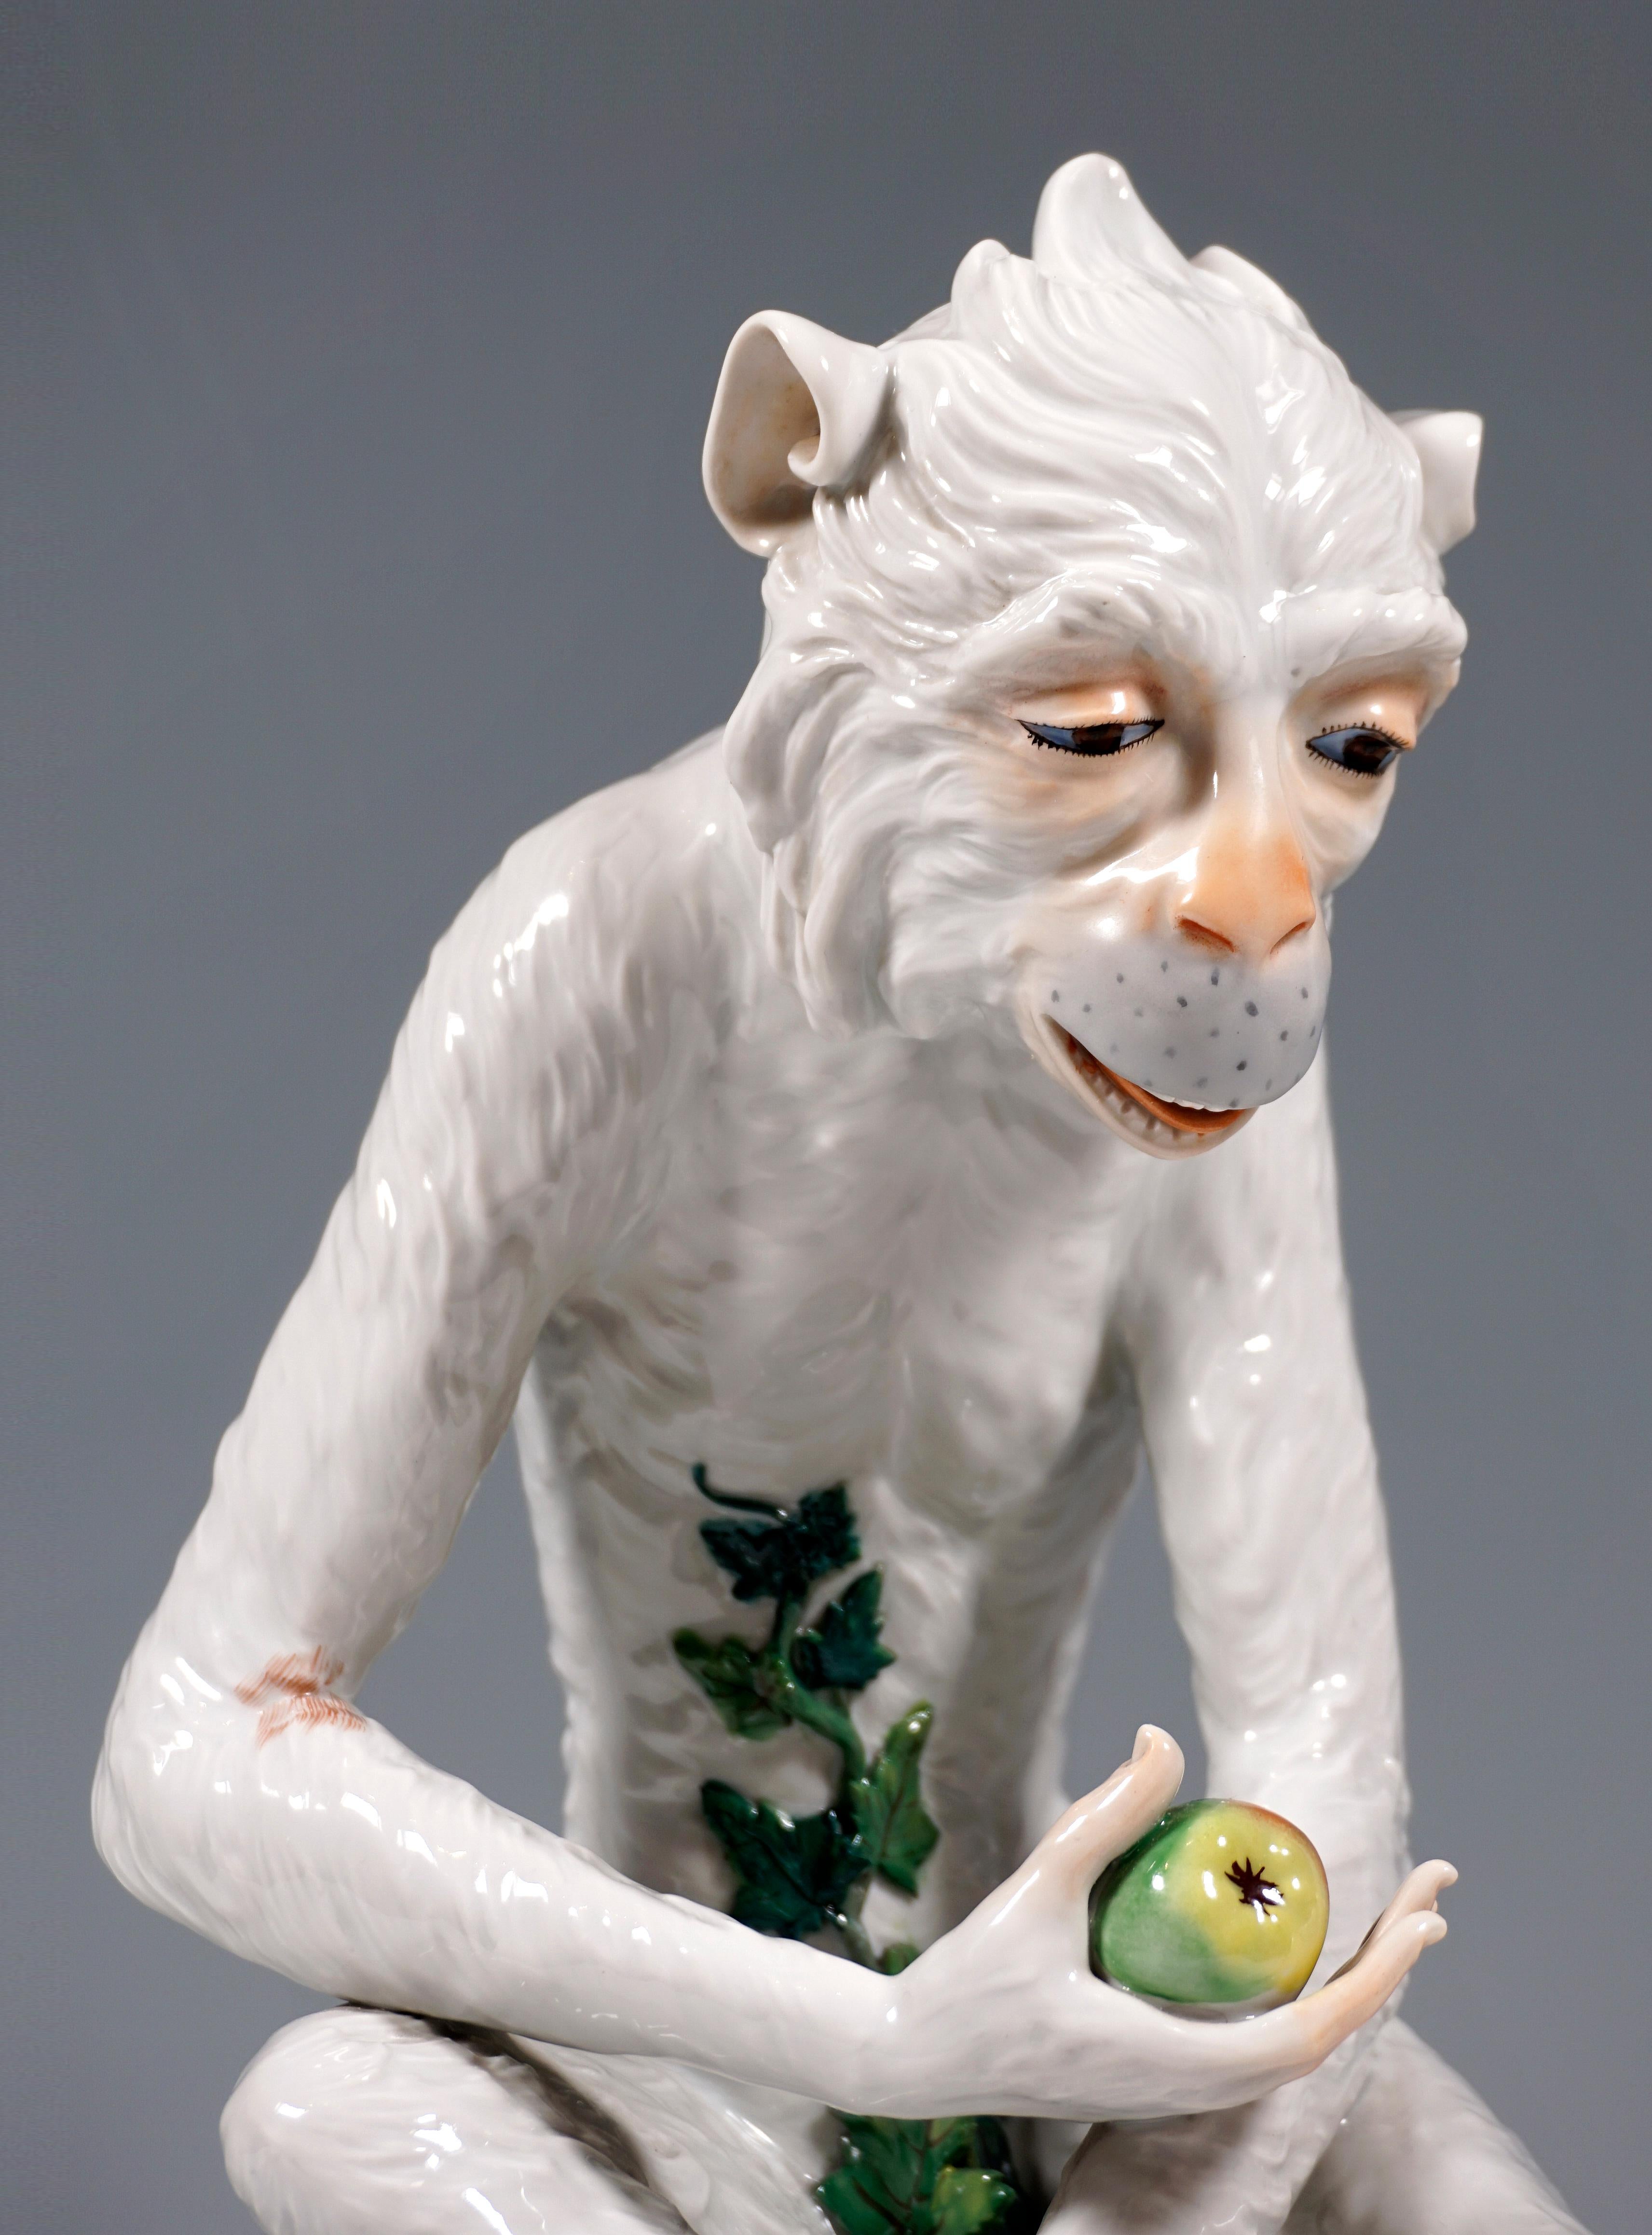 German Porcelain Animal Figure 'Monkey With Apple' by J. G. Kirchner, Dresden, ca. 1905